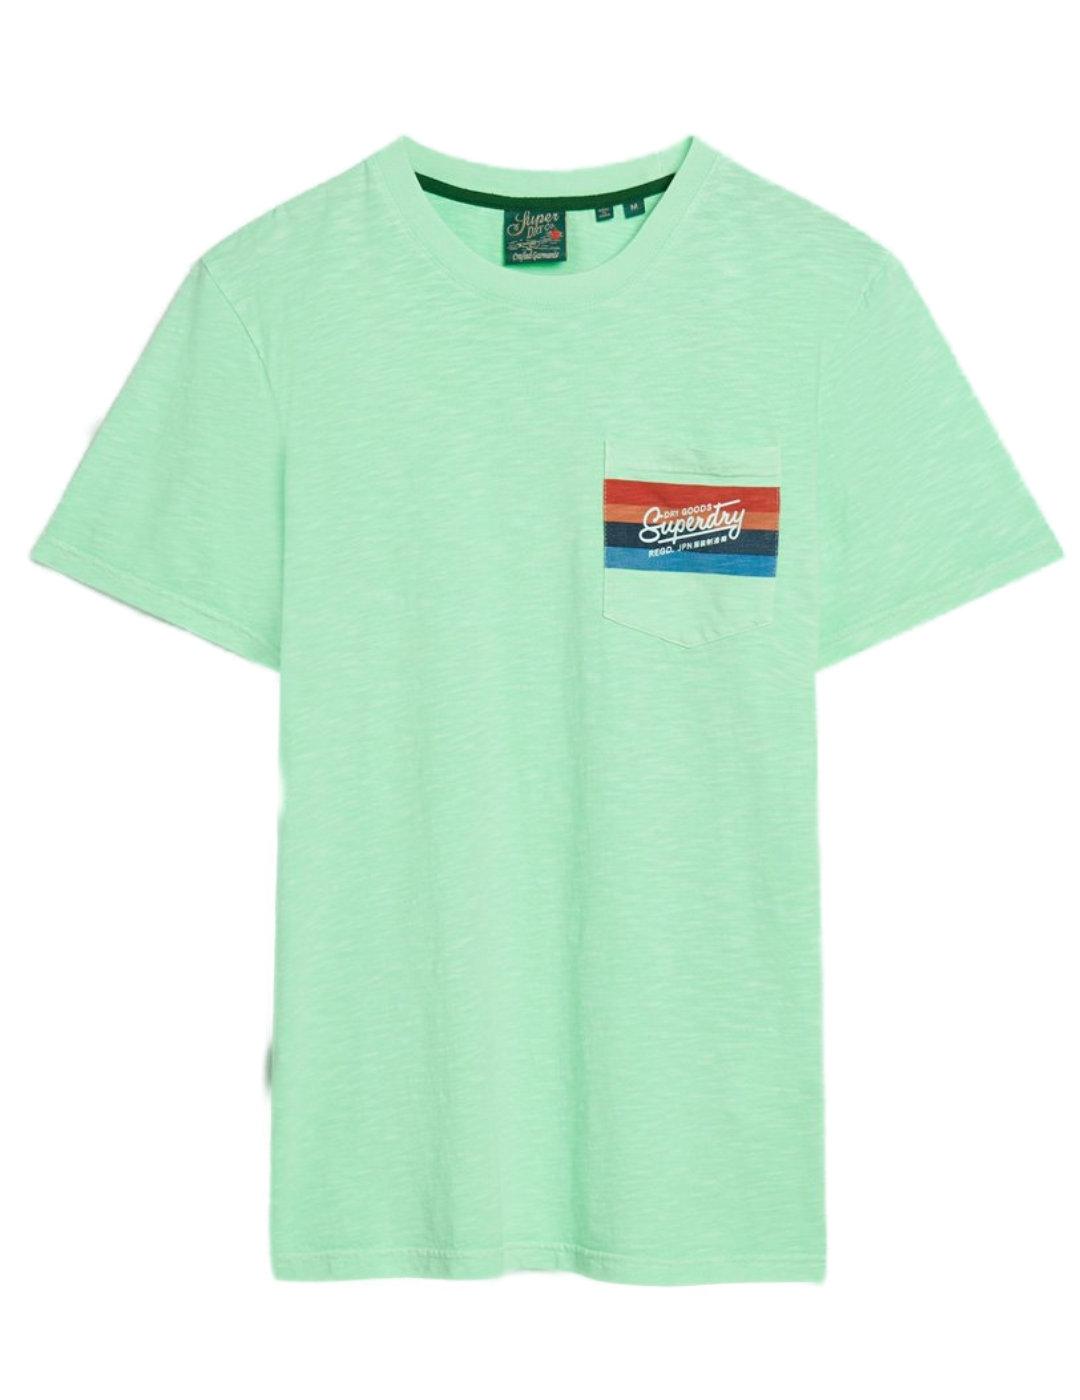 Camisetas Superdry Cali verde neon manga corta para hombre